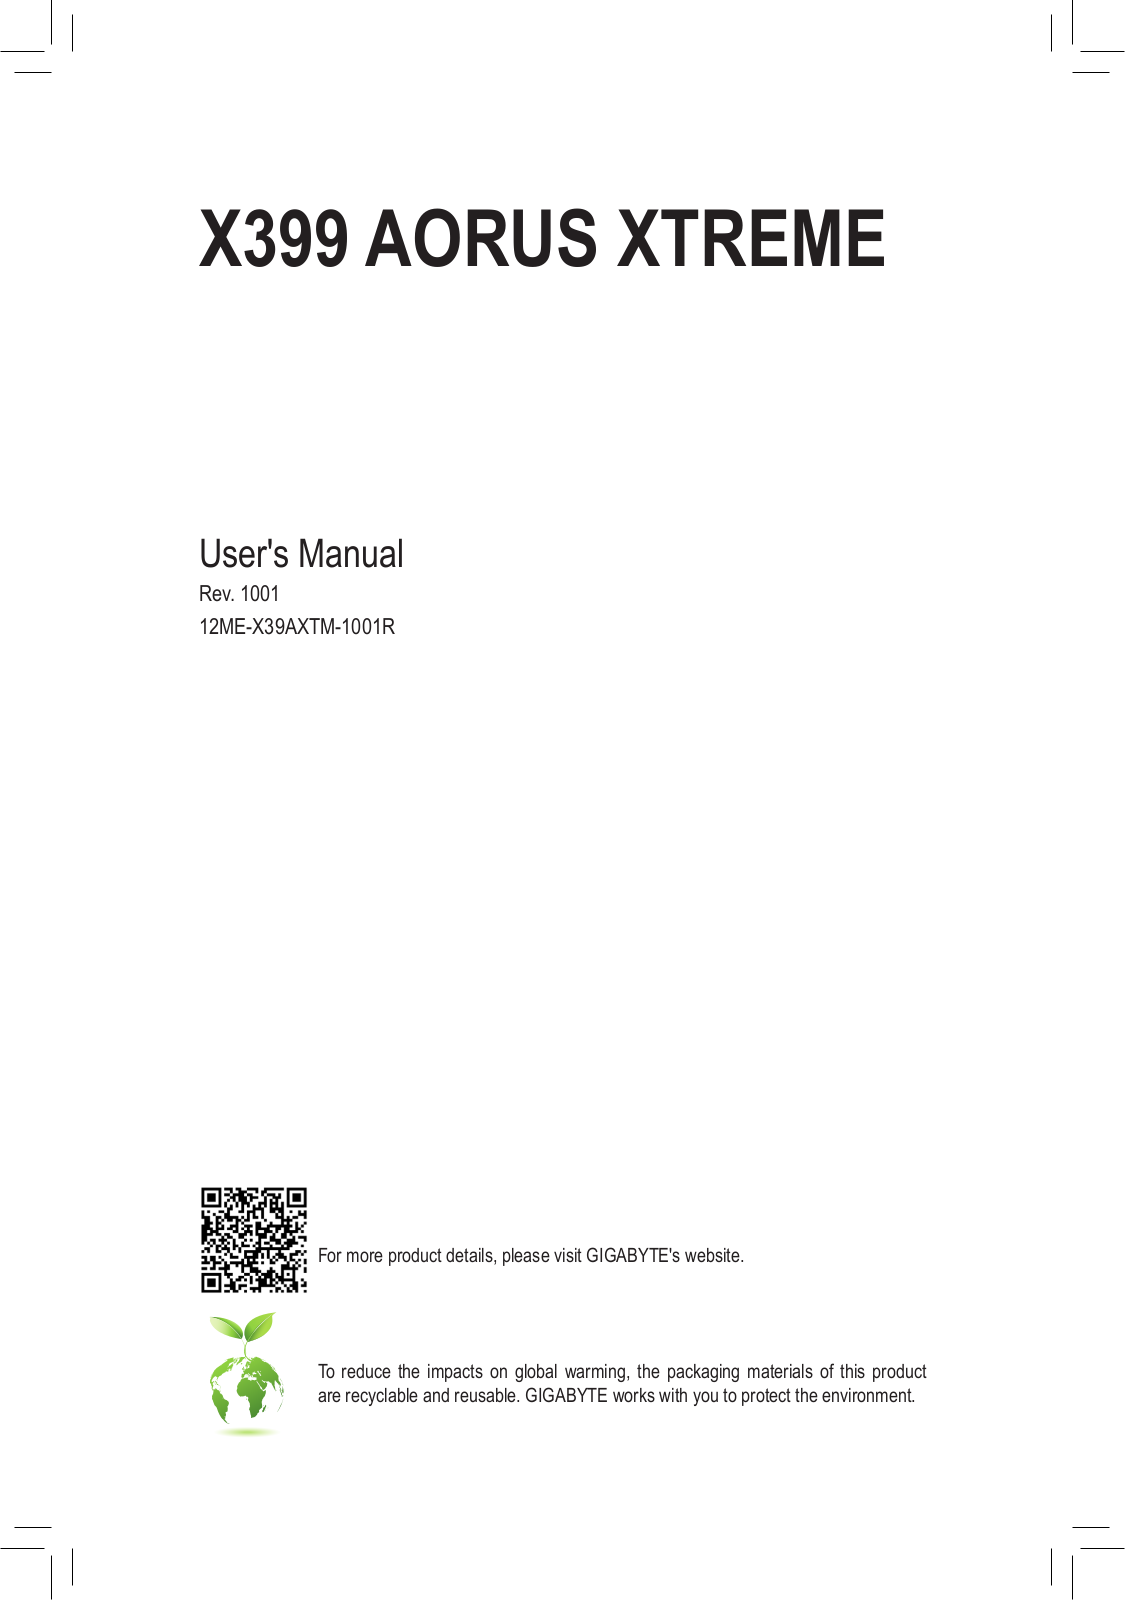 Gigabyte X399 Aorus Xtreme Service Manual